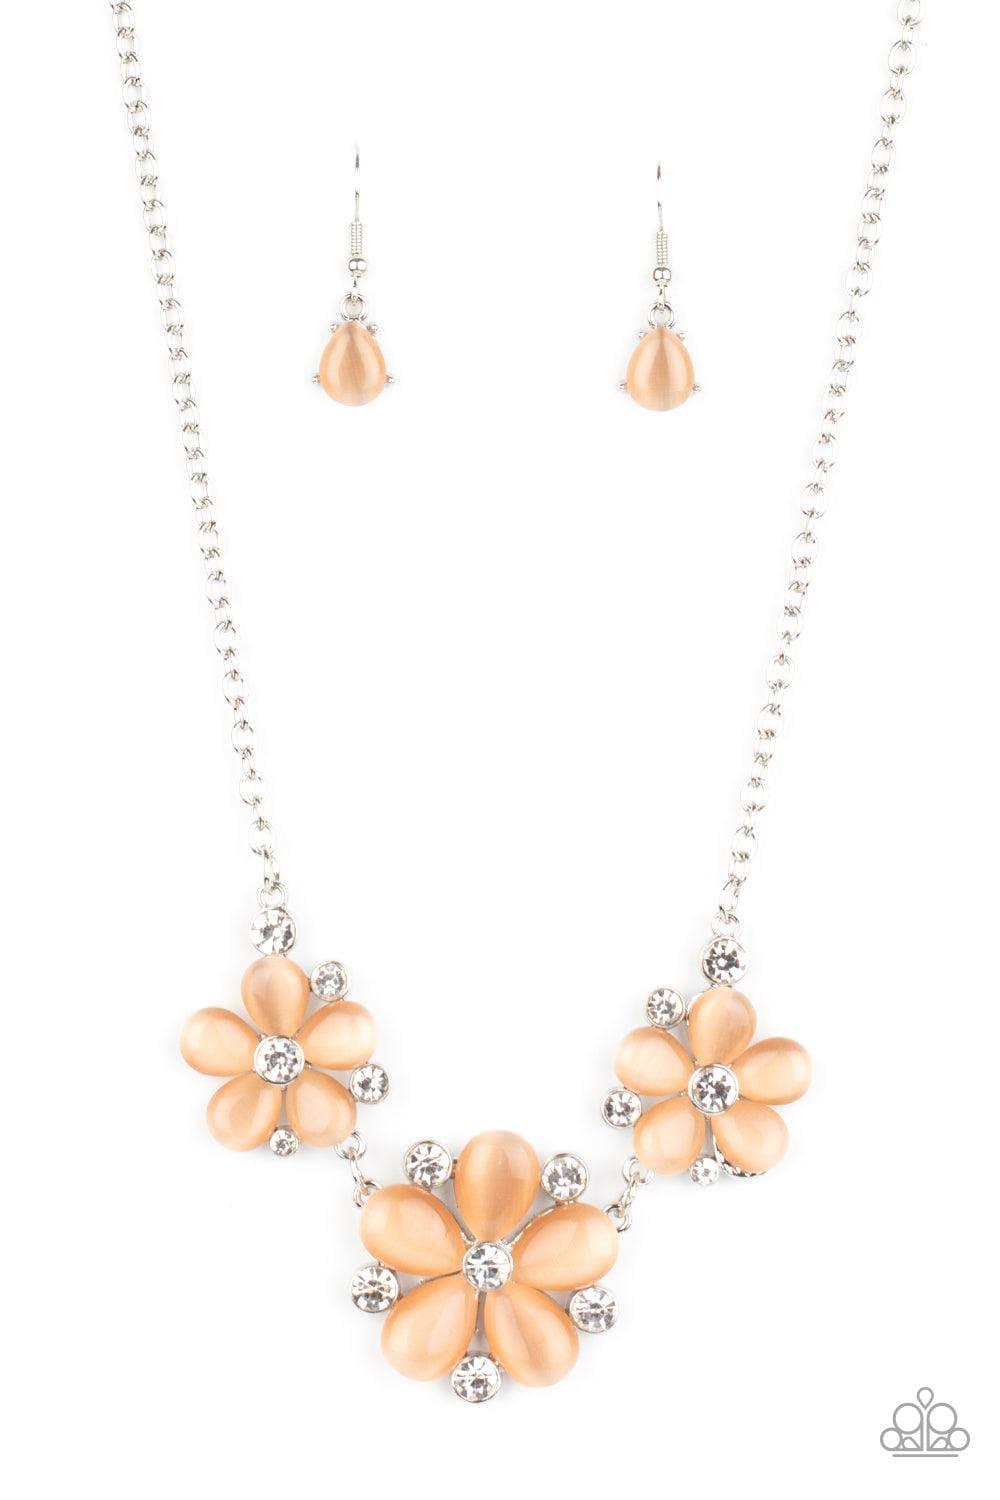 Paparazzi Accessories - Effortlessly Efflorescent - Orange Necklace - Bling by JessieK